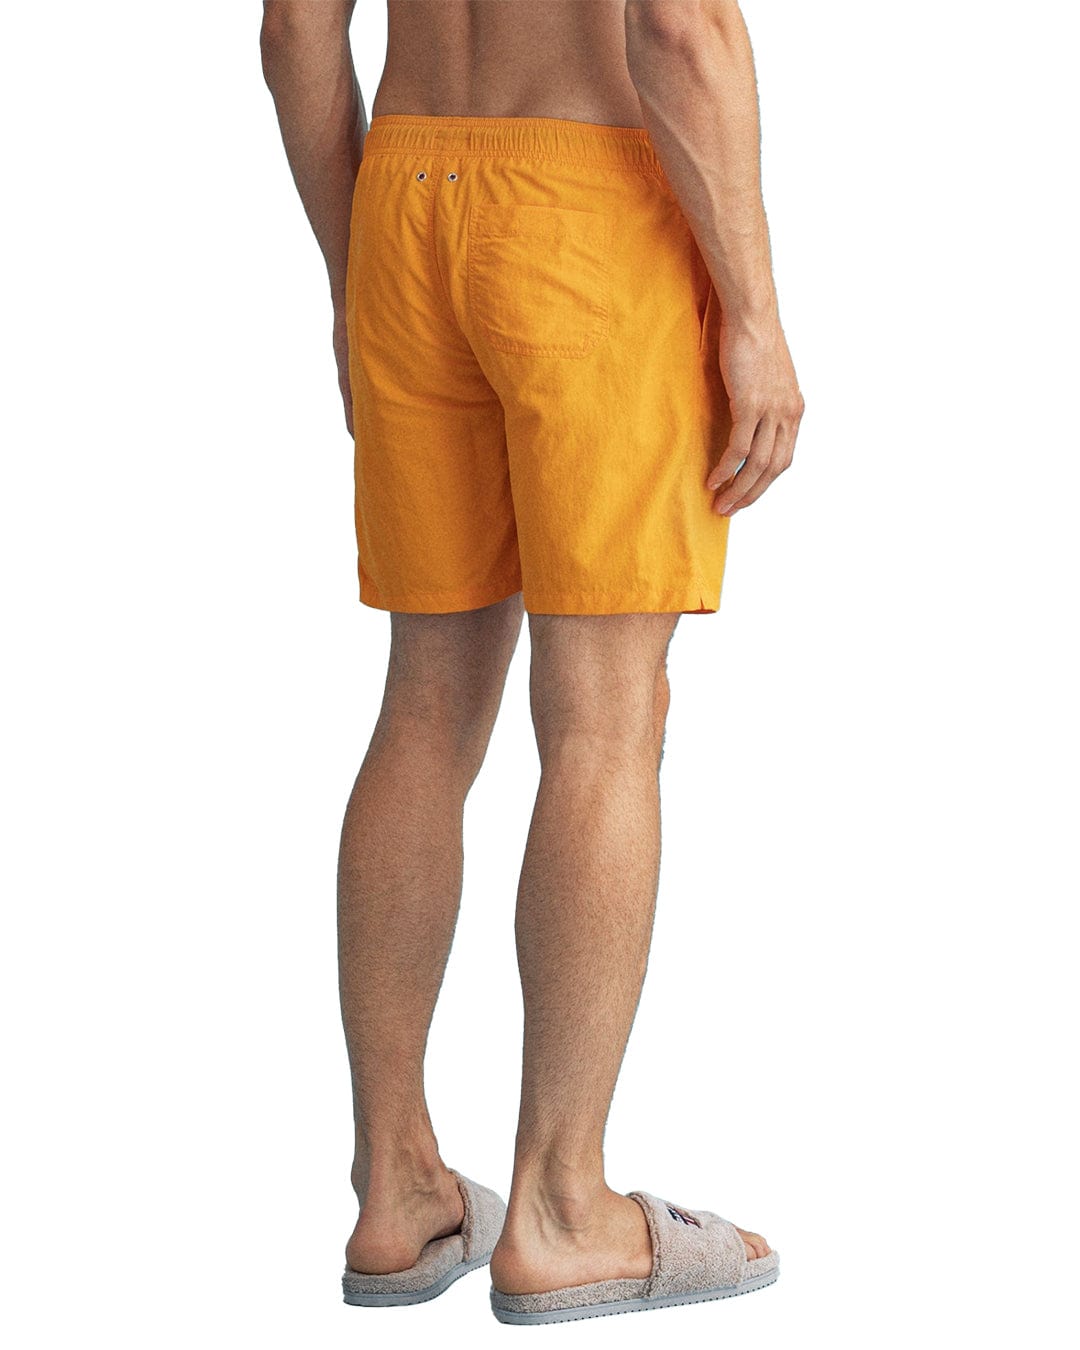 Gant Swimwear Gant Classic Fit Orange Swim Shorts